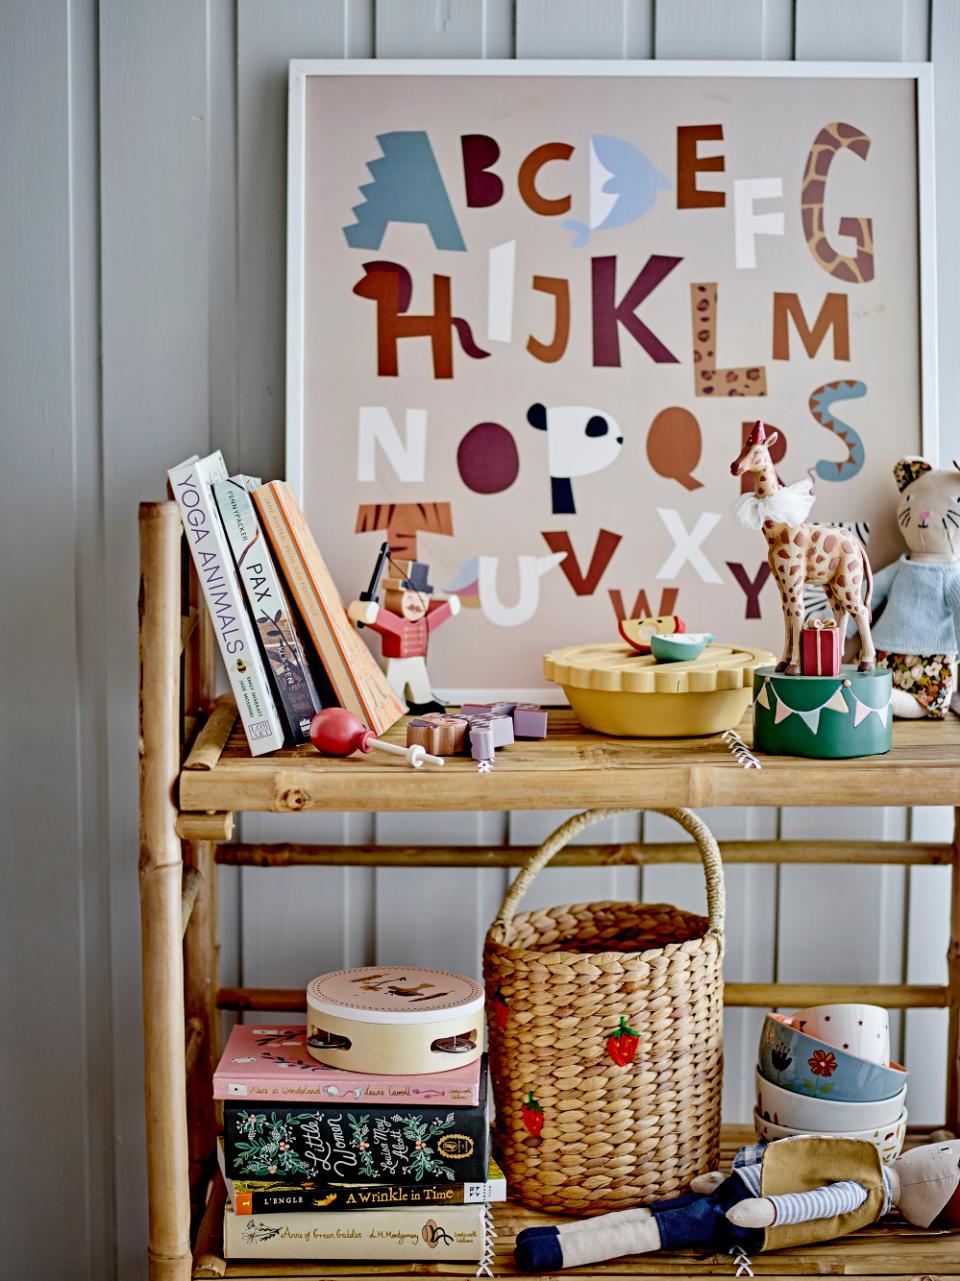 Masha and the Bear Toys, Playroom Furniture and Children's Tableware -  Jemini